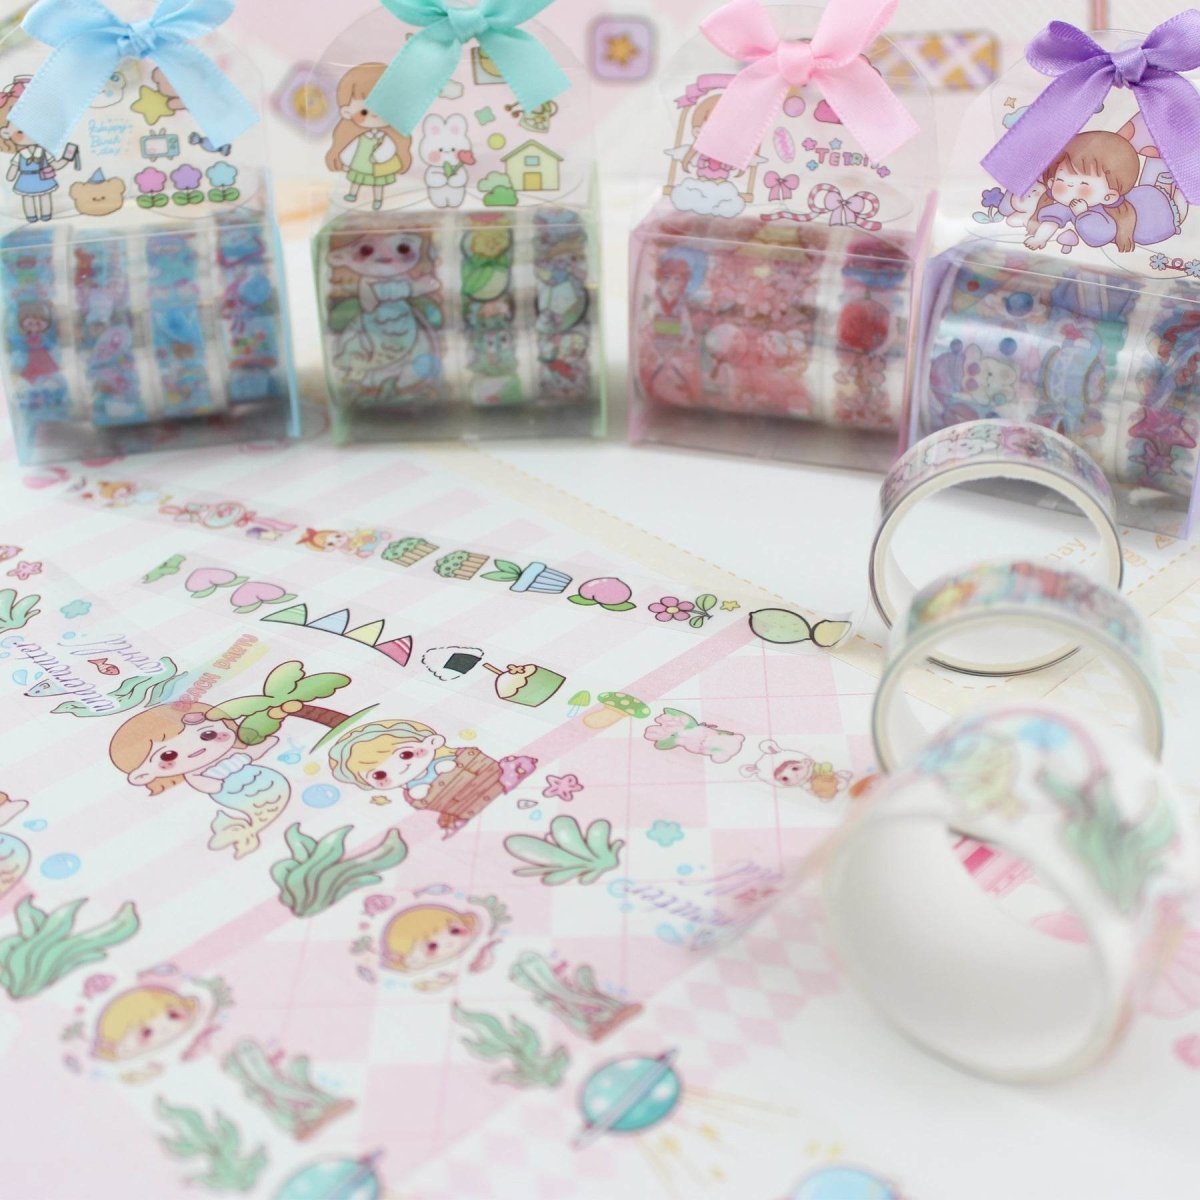 4 Packs Washi Tapes Cute Aesthetic Cartoon Gift Decorative Washi Tape